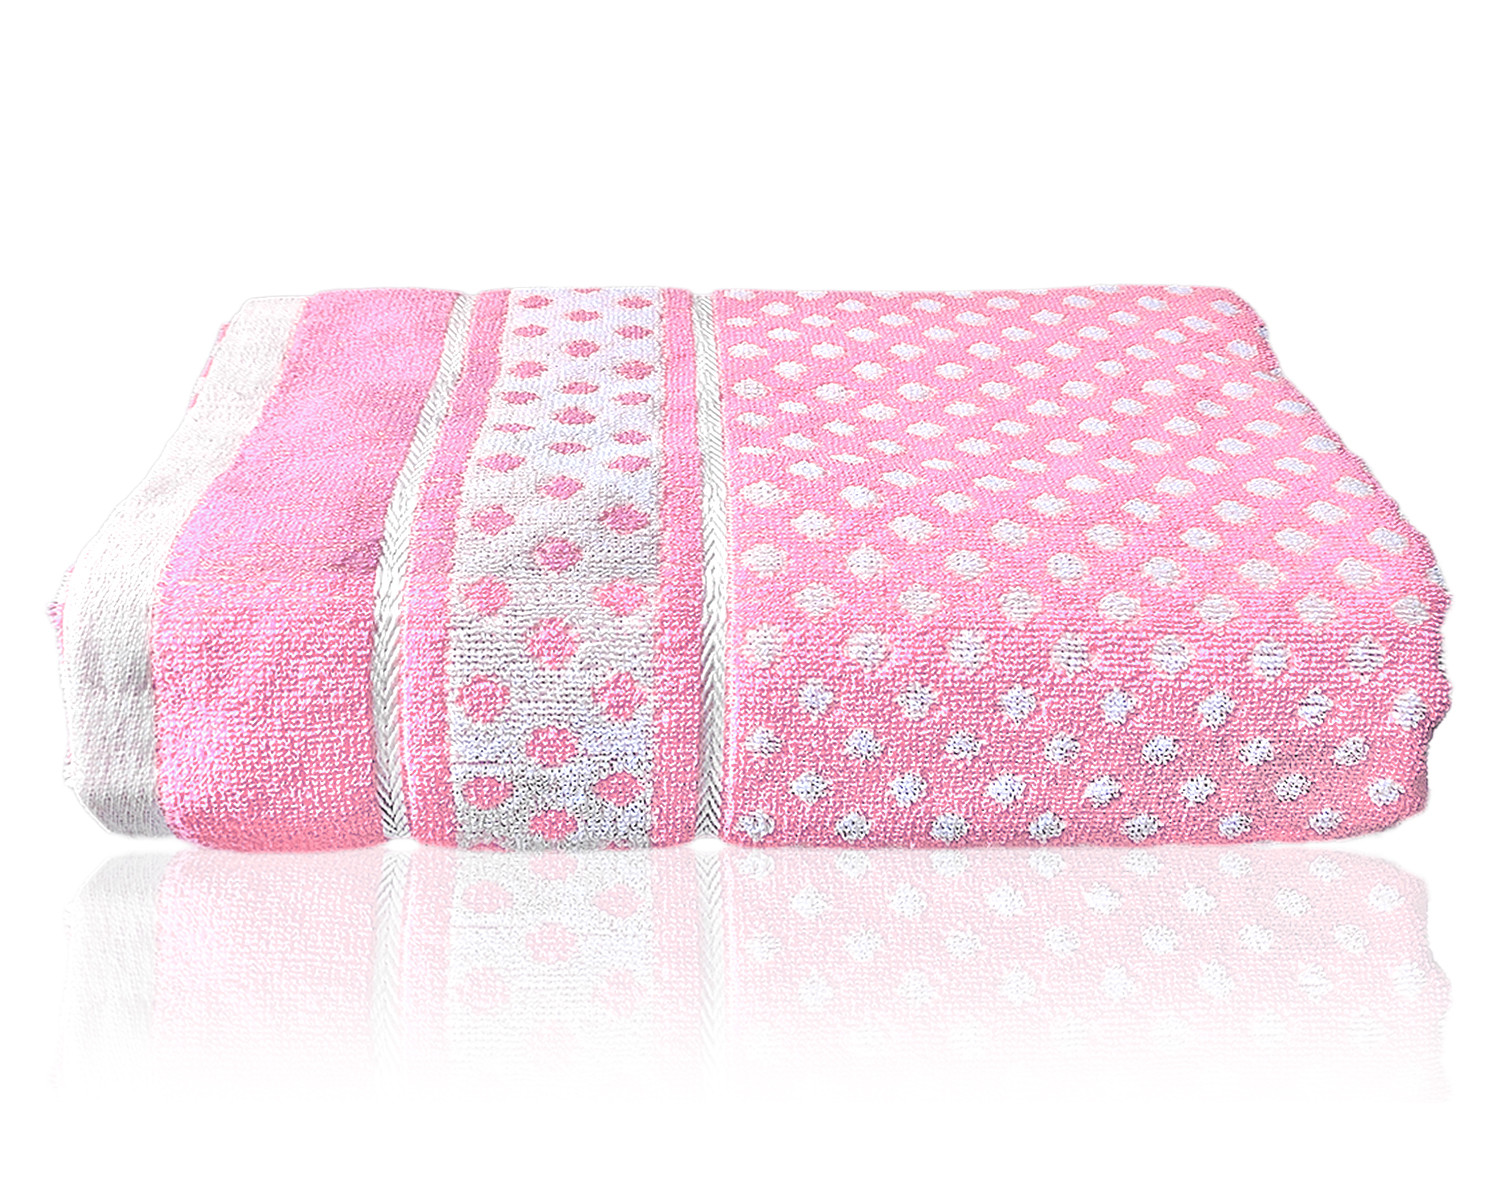 Kuber Industries Multiuses Dot Printed Soft Cotton Bath Towel, 30